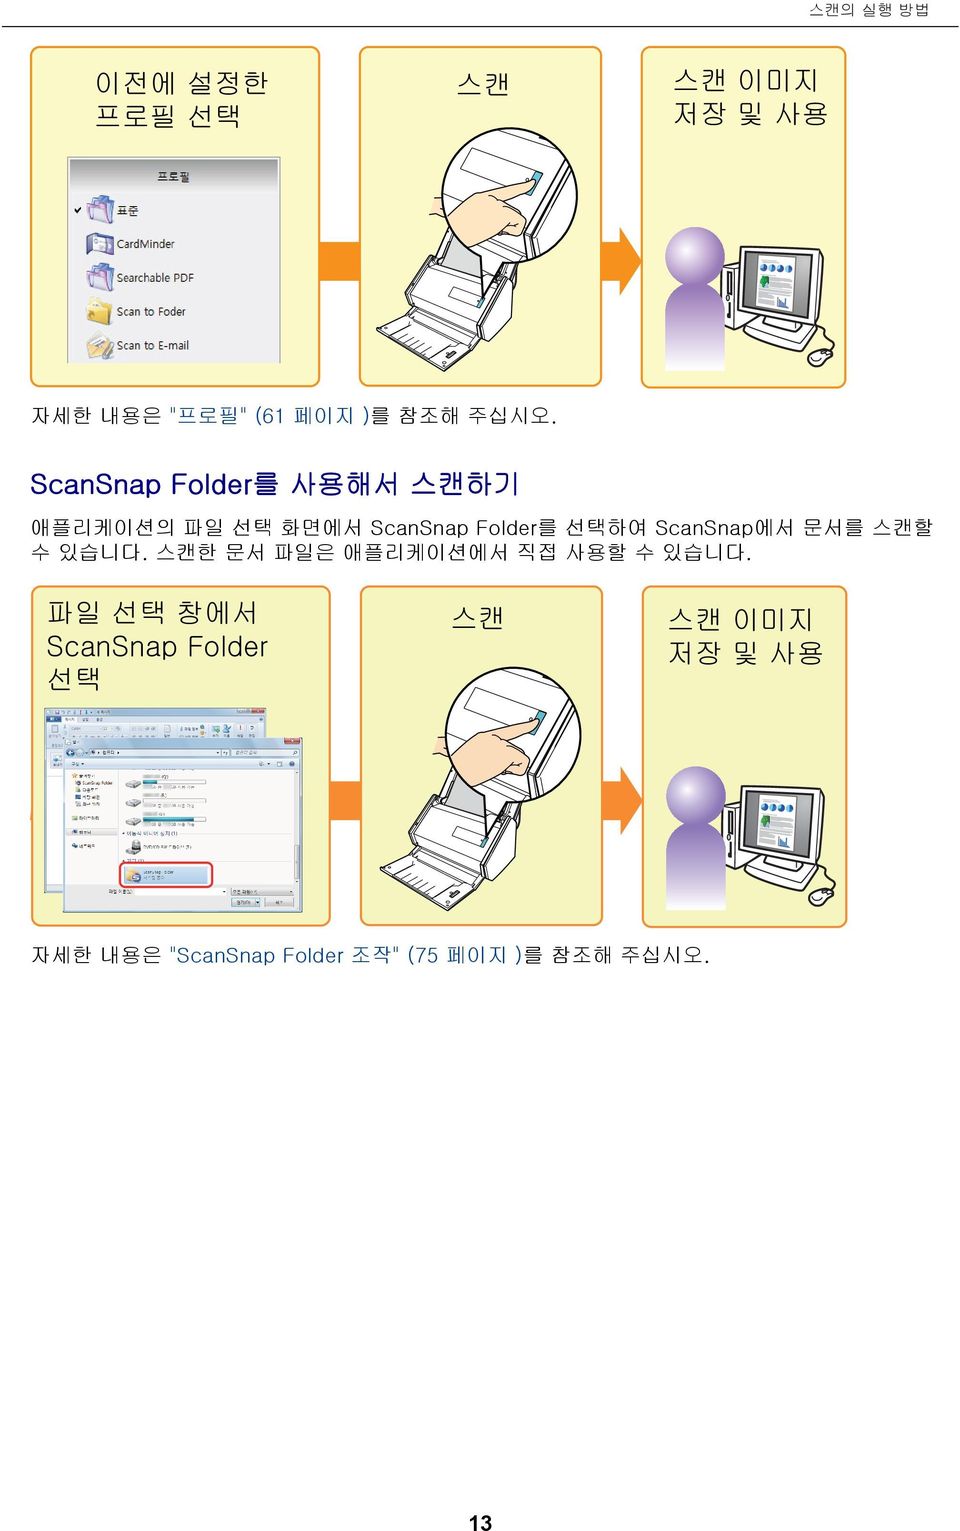 Folder를 선택하여 ScanSnap에서 문서를 스캔할 수 있습니다.